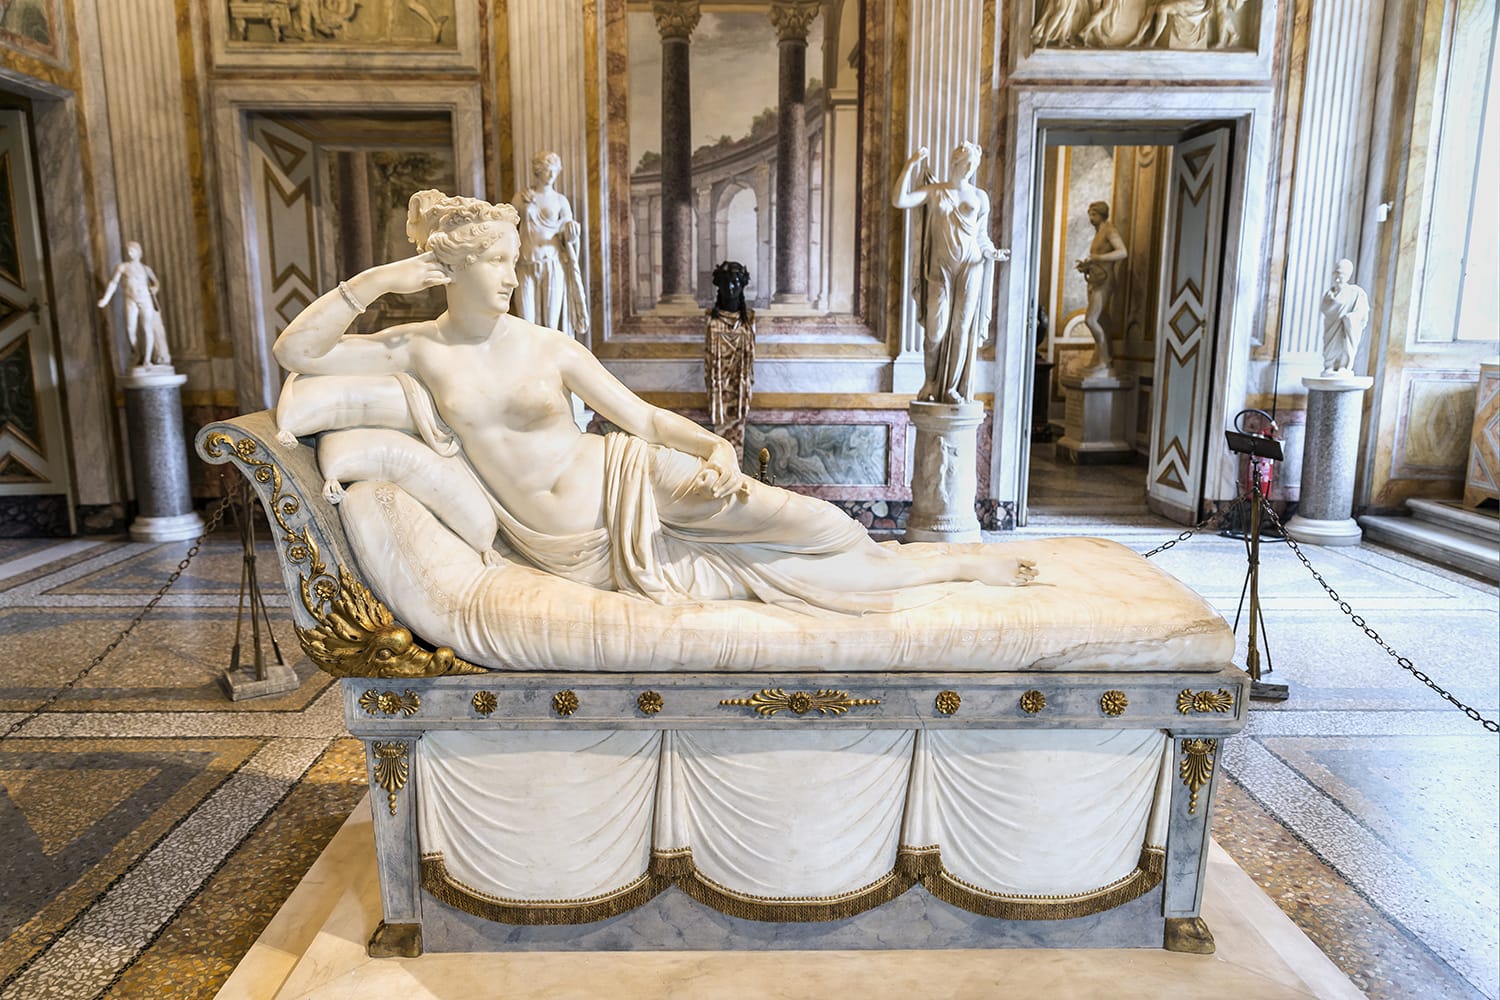 Magnificent sculpture of Pauline Bonaparte masterpiece by famous sculptor Antonio Canova in Galleria Borghese, Rome, Italy